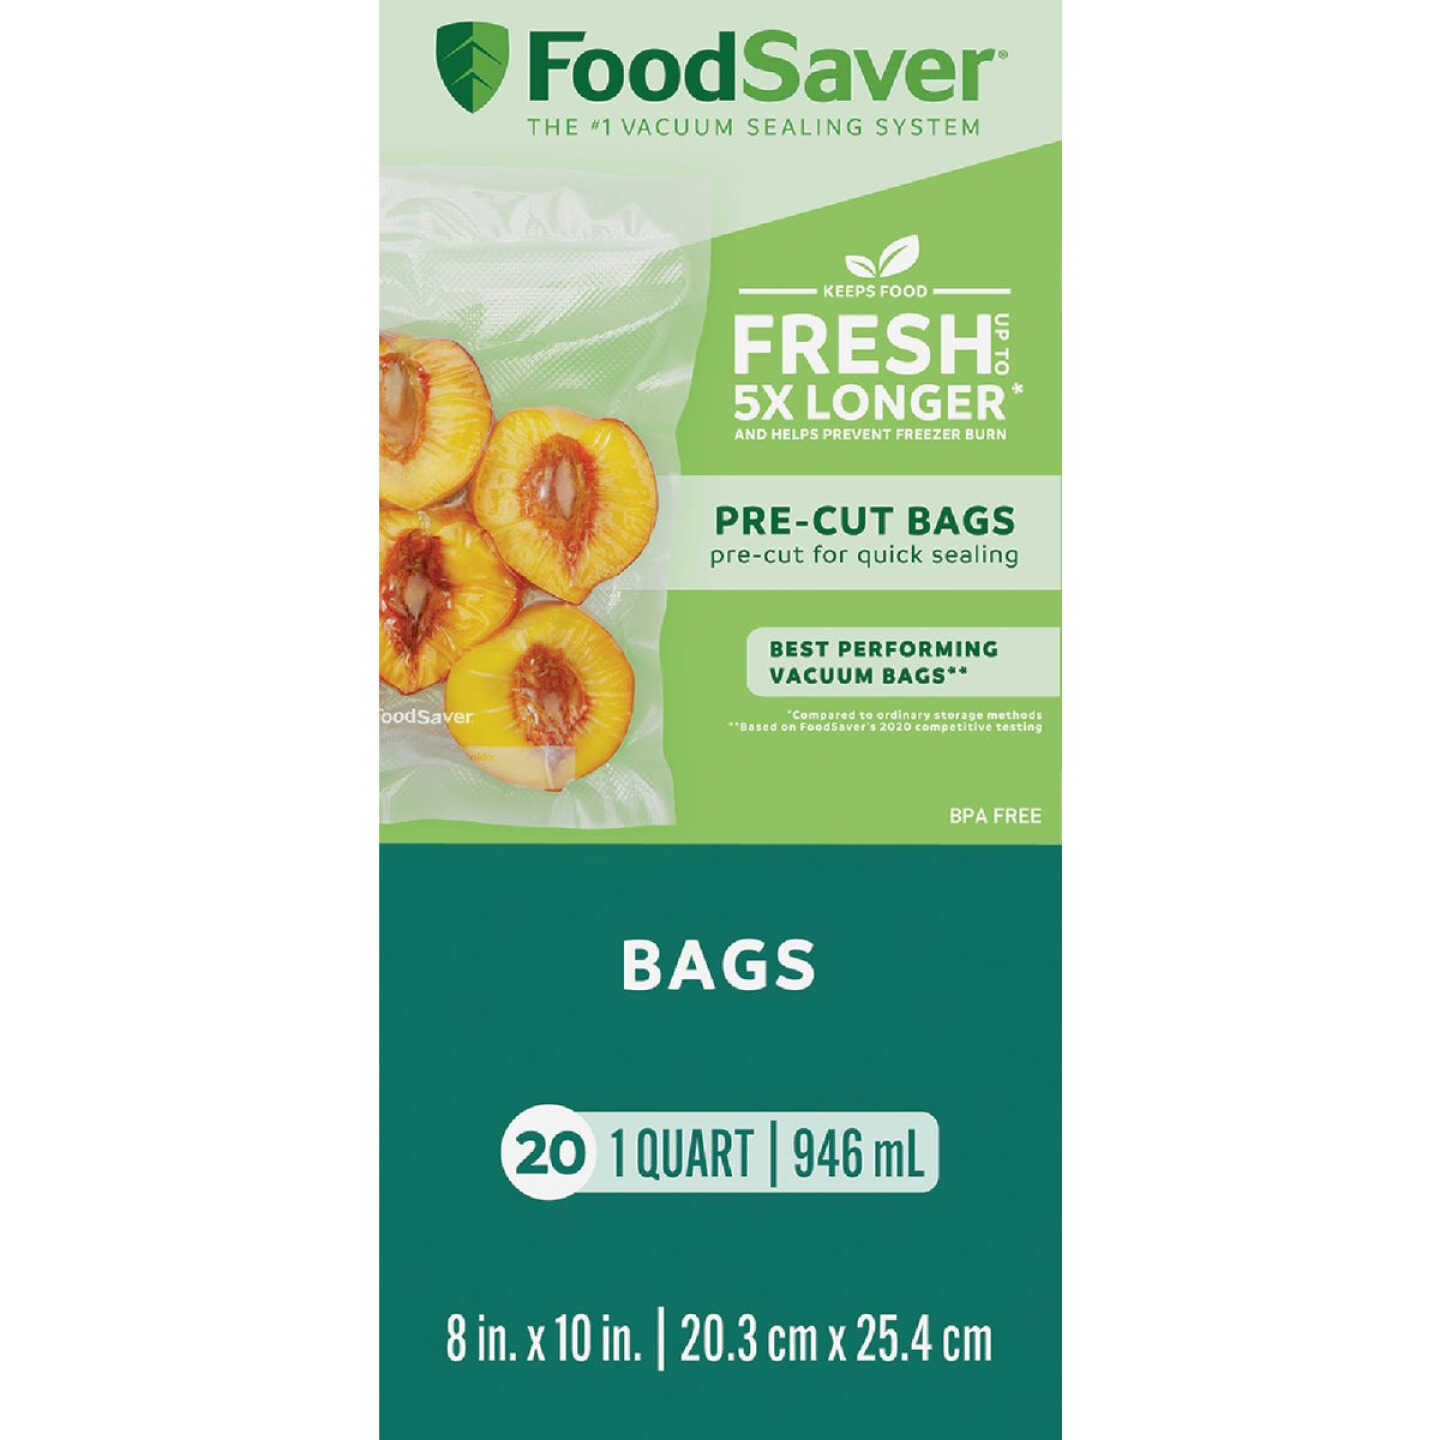 Freezer Bags, Pint, 20-Ct.